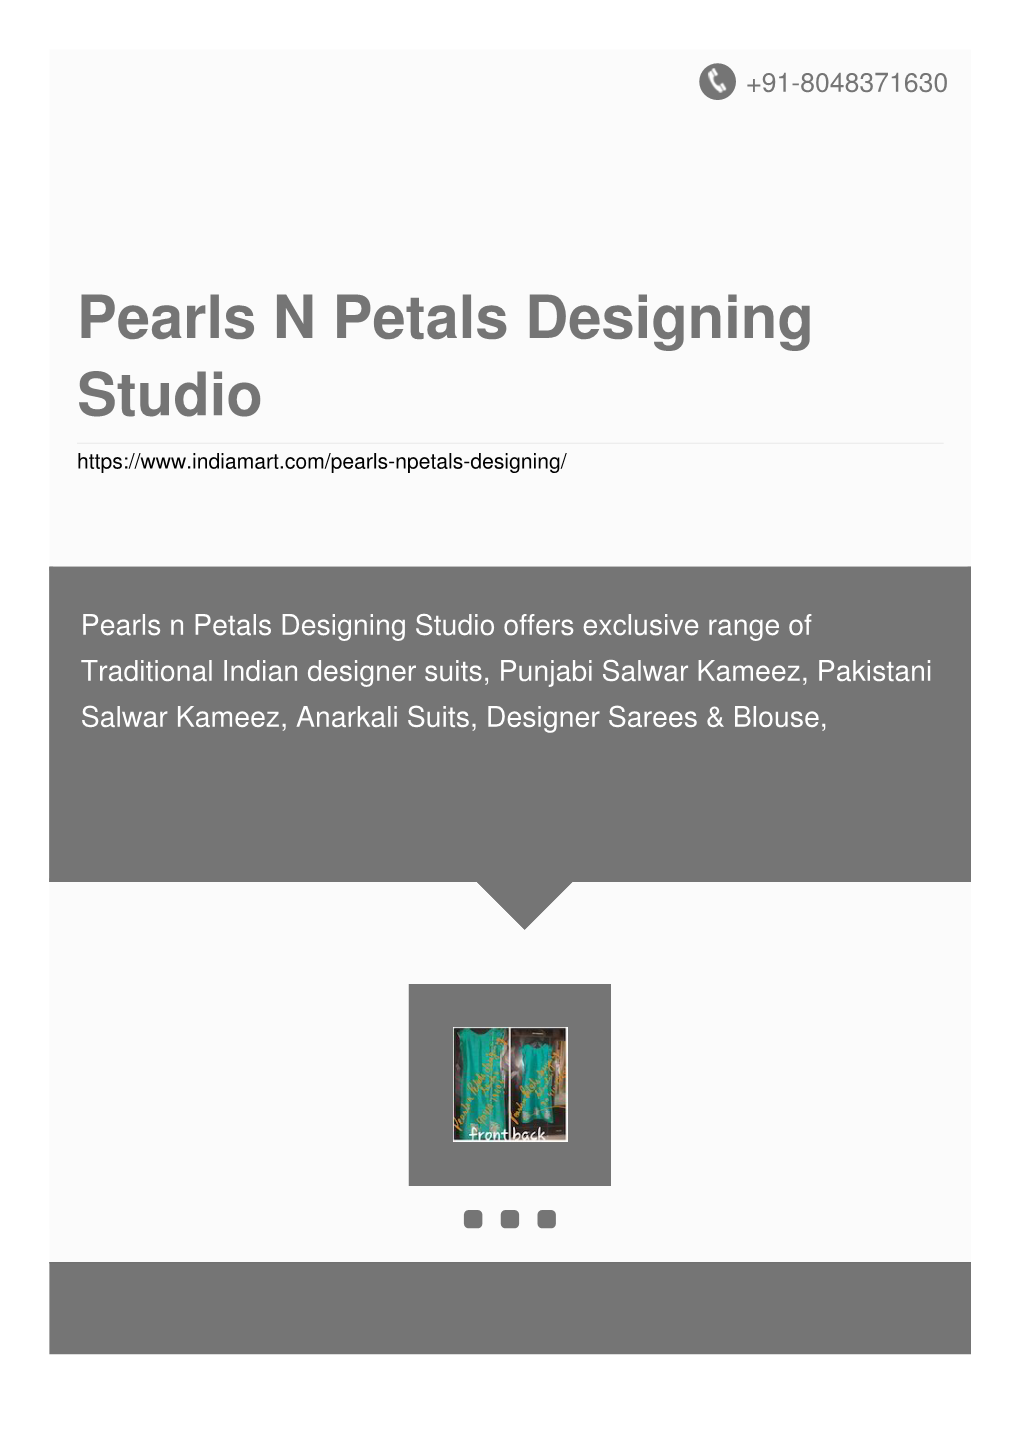 Pearls N Petals Designing Studio